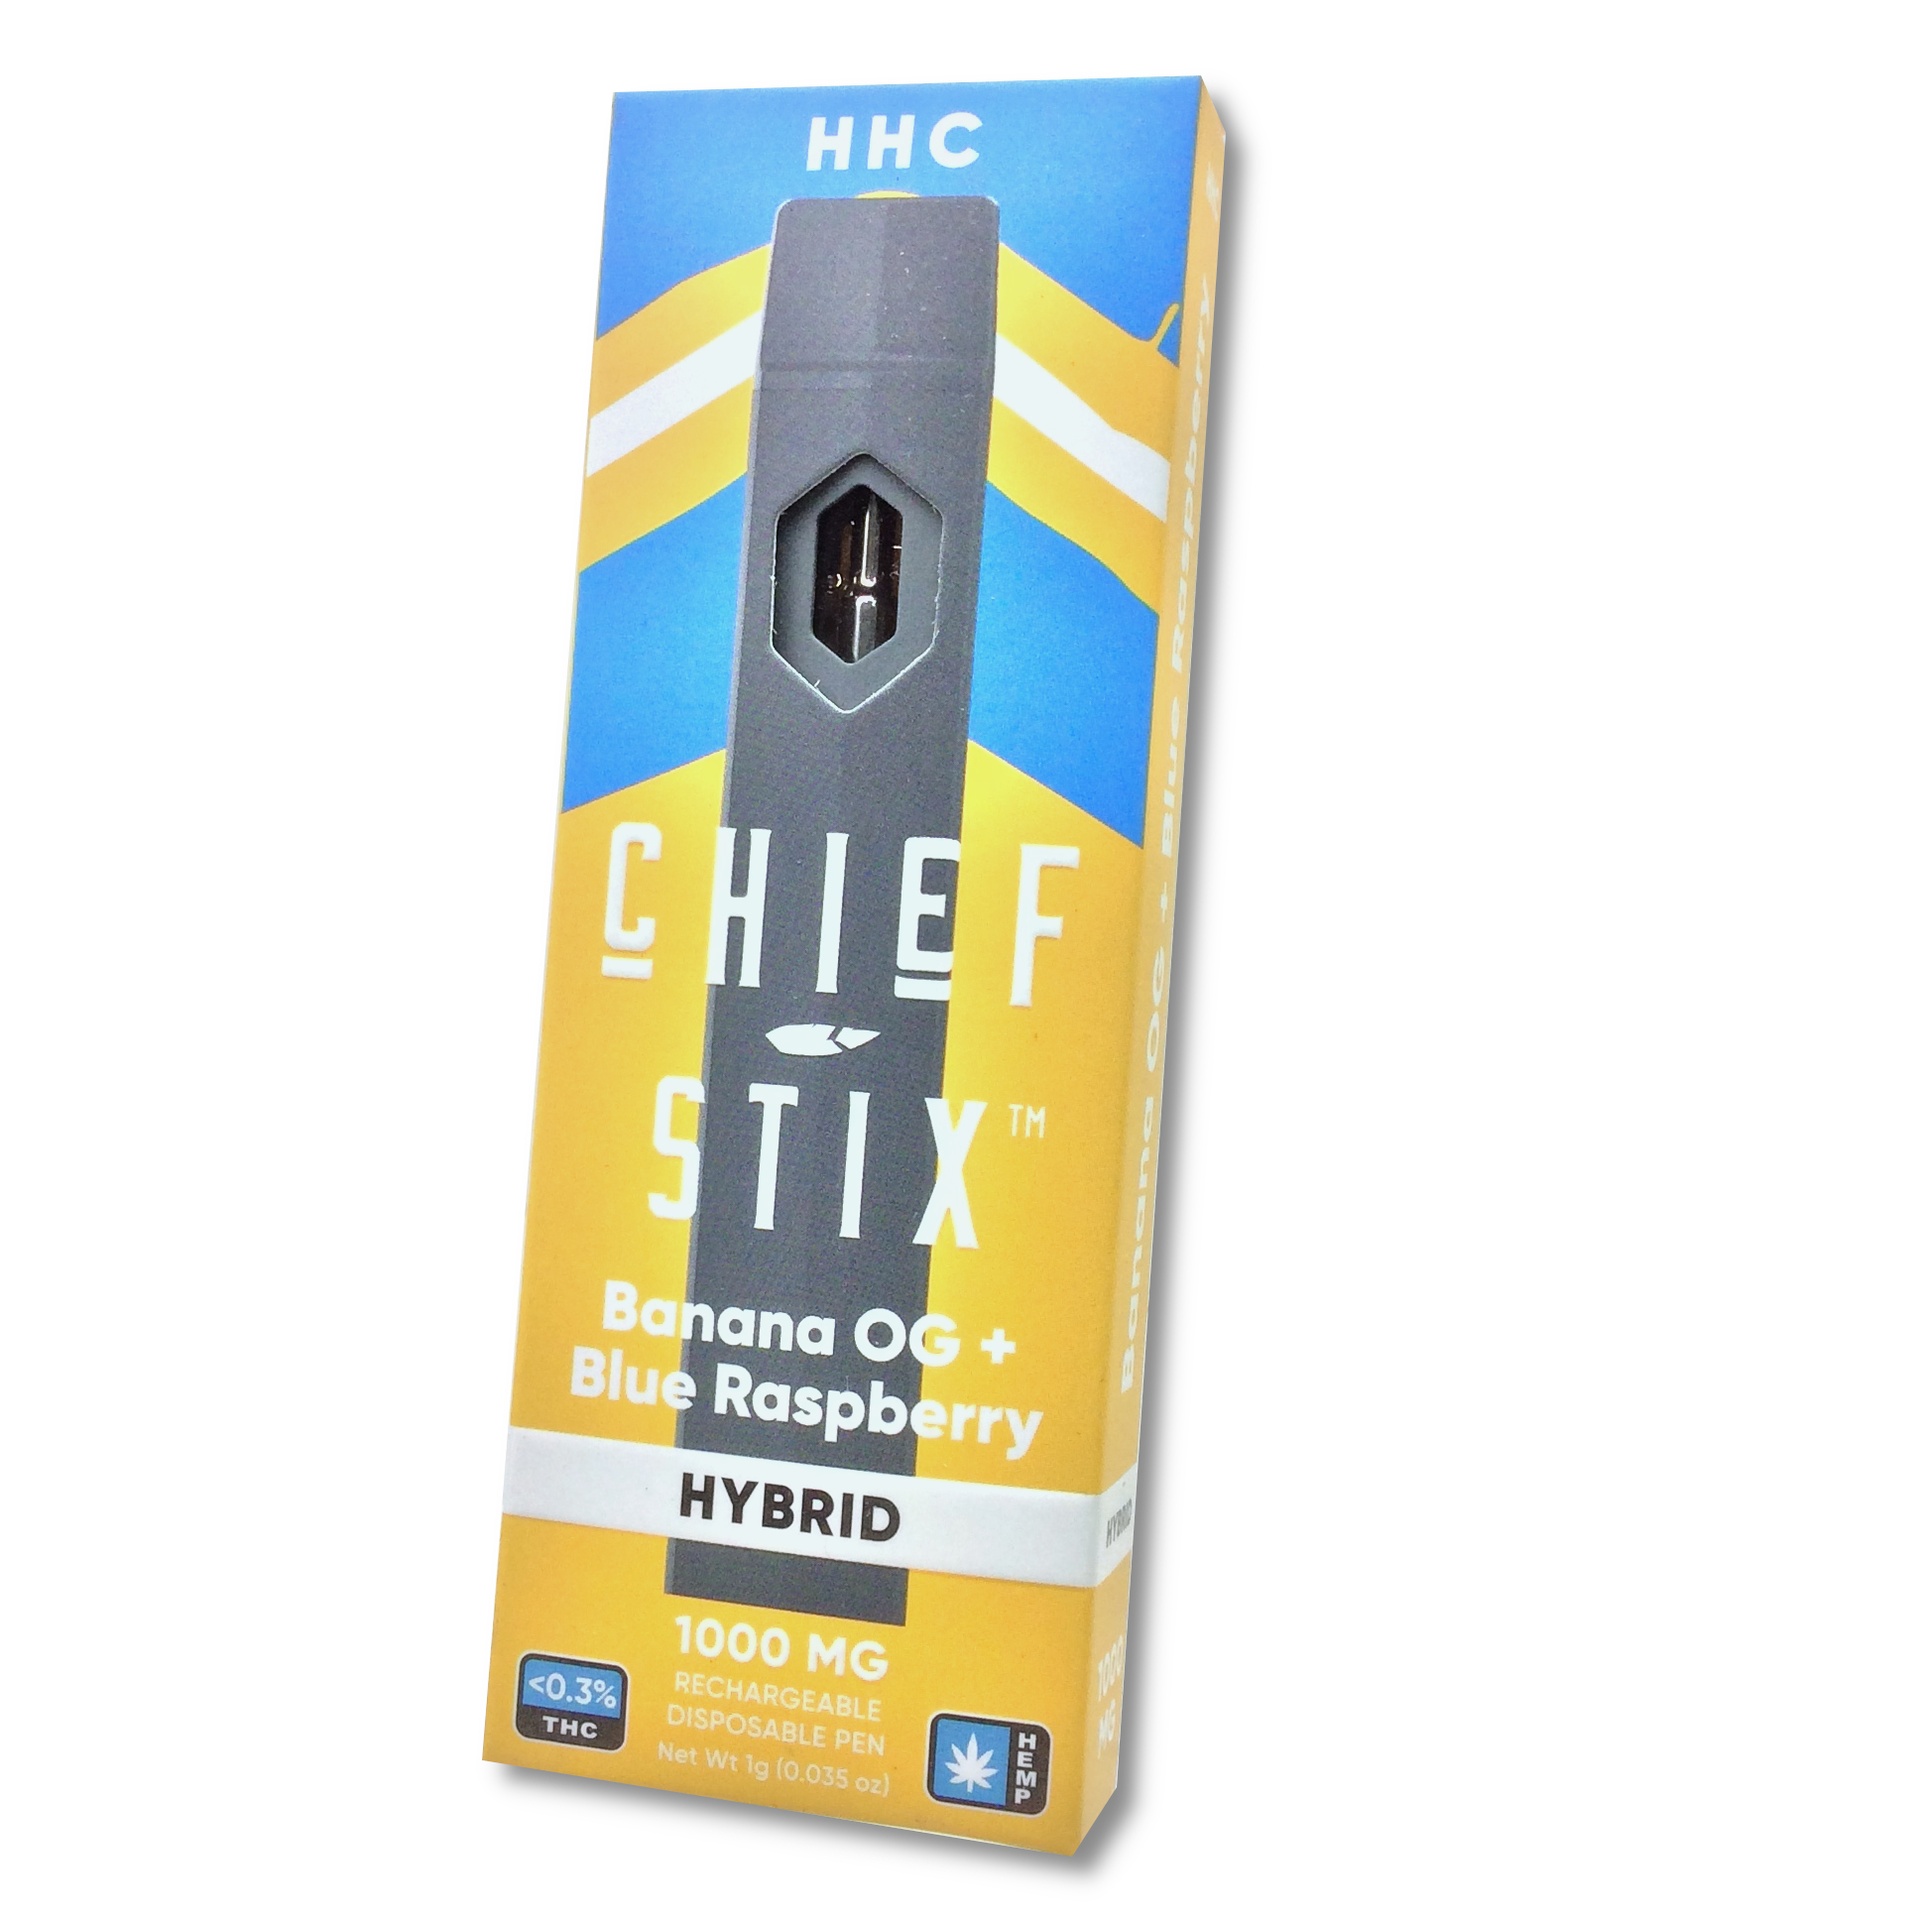 [850041529769] Chief Stix HHC 1000Mg Rechargable Disposable (Hybrid Banana OG + Blue Raspberry)